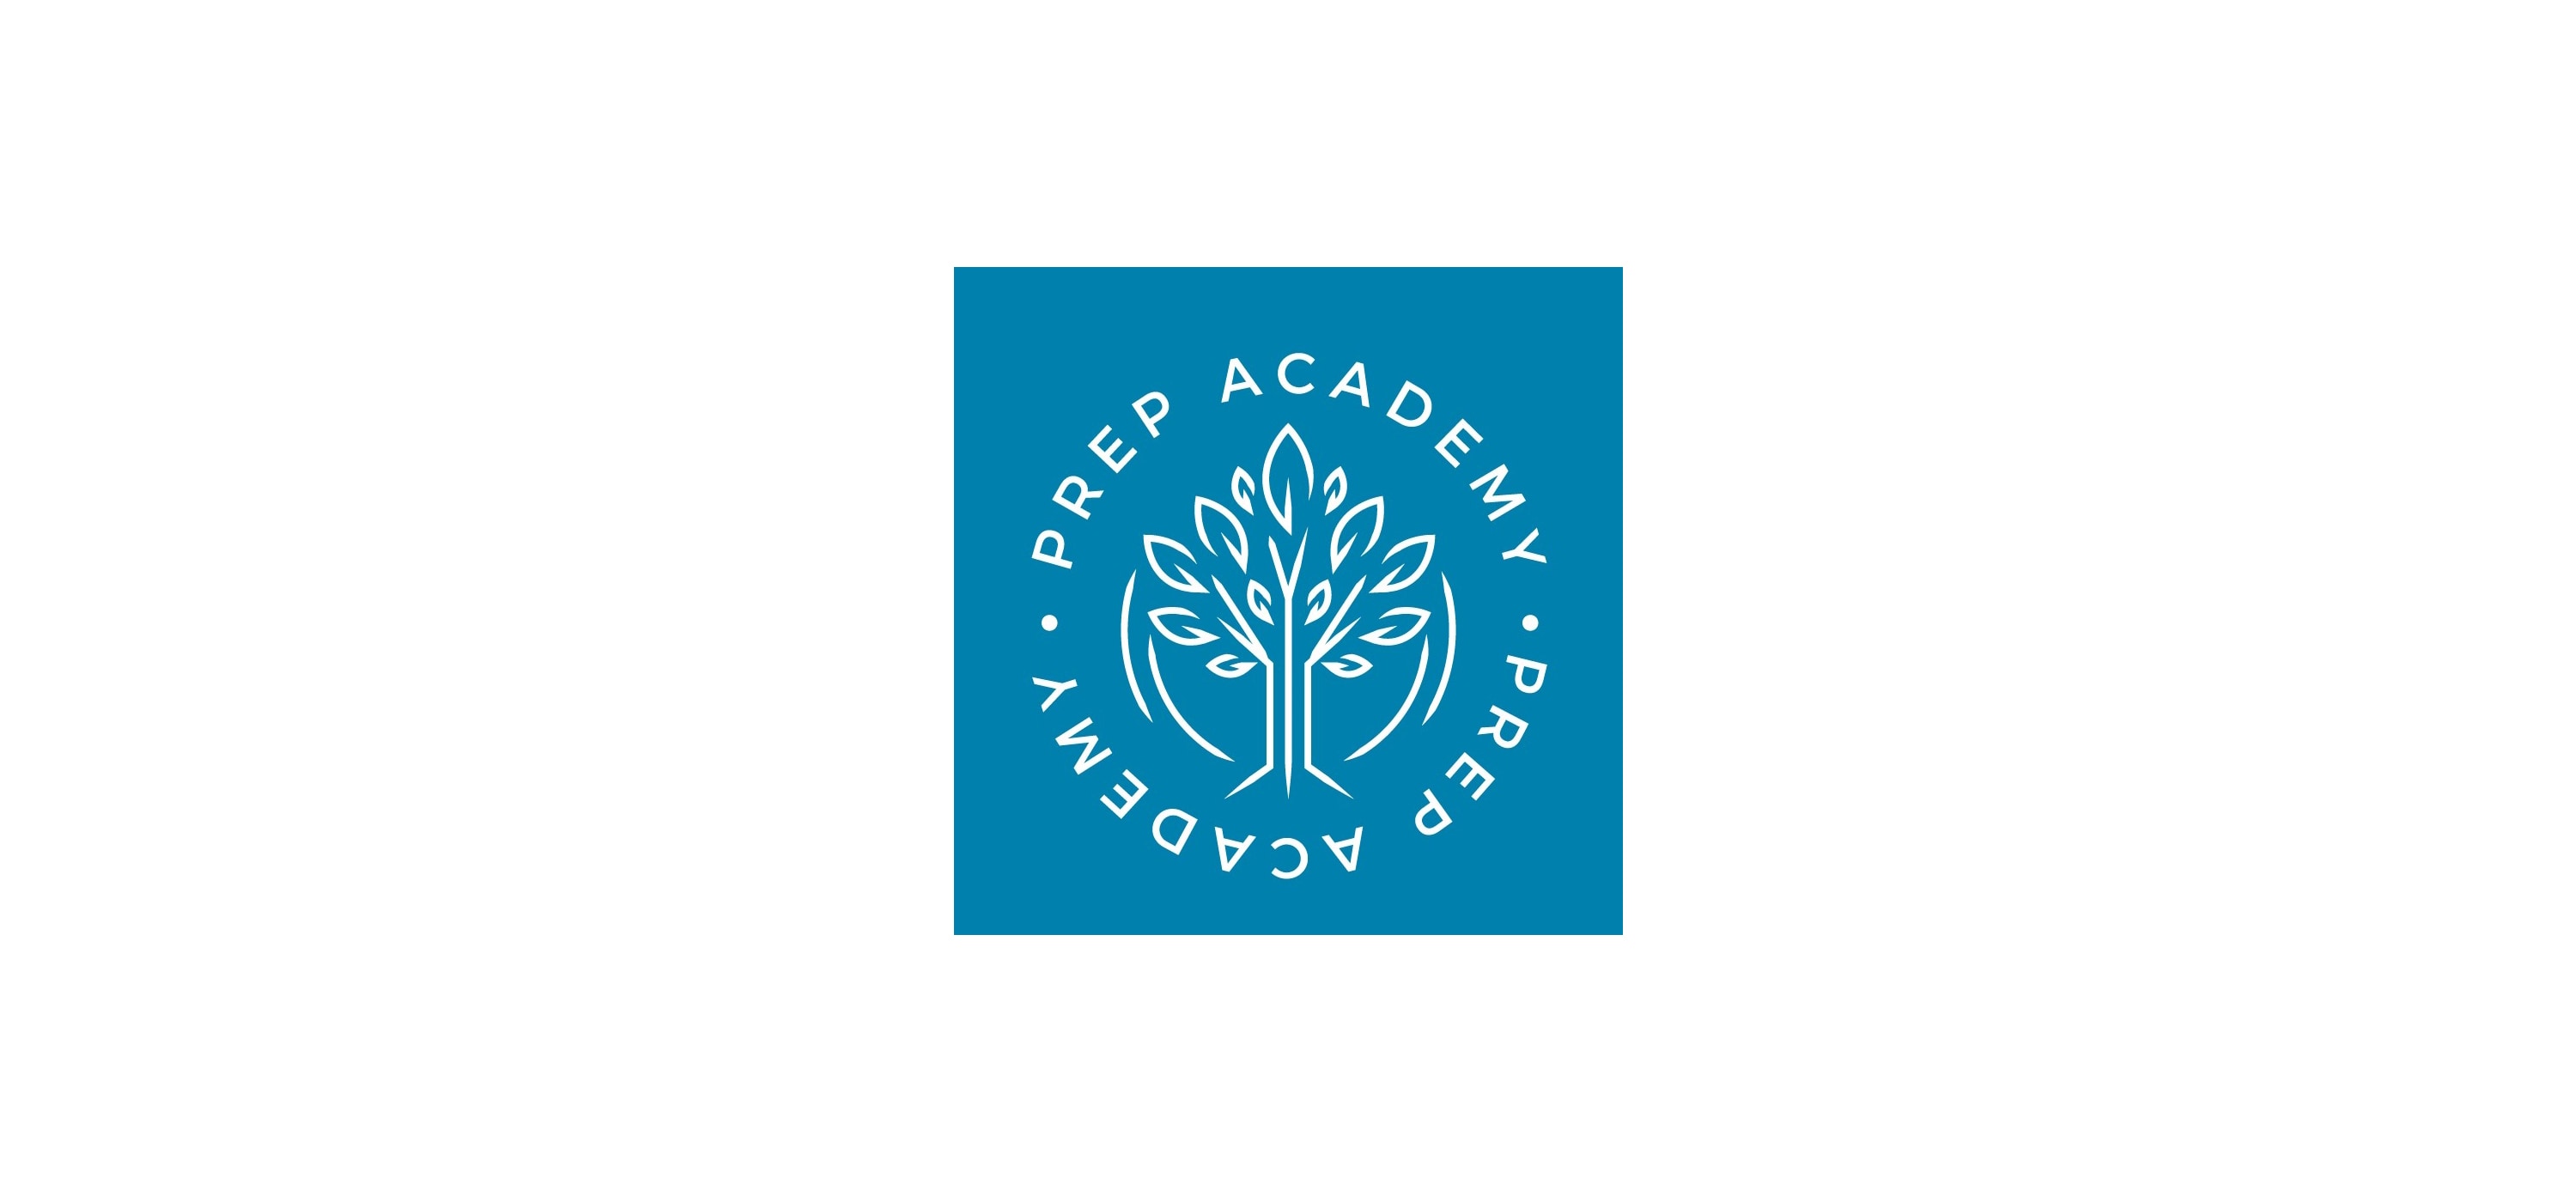 The PREP Academy logo